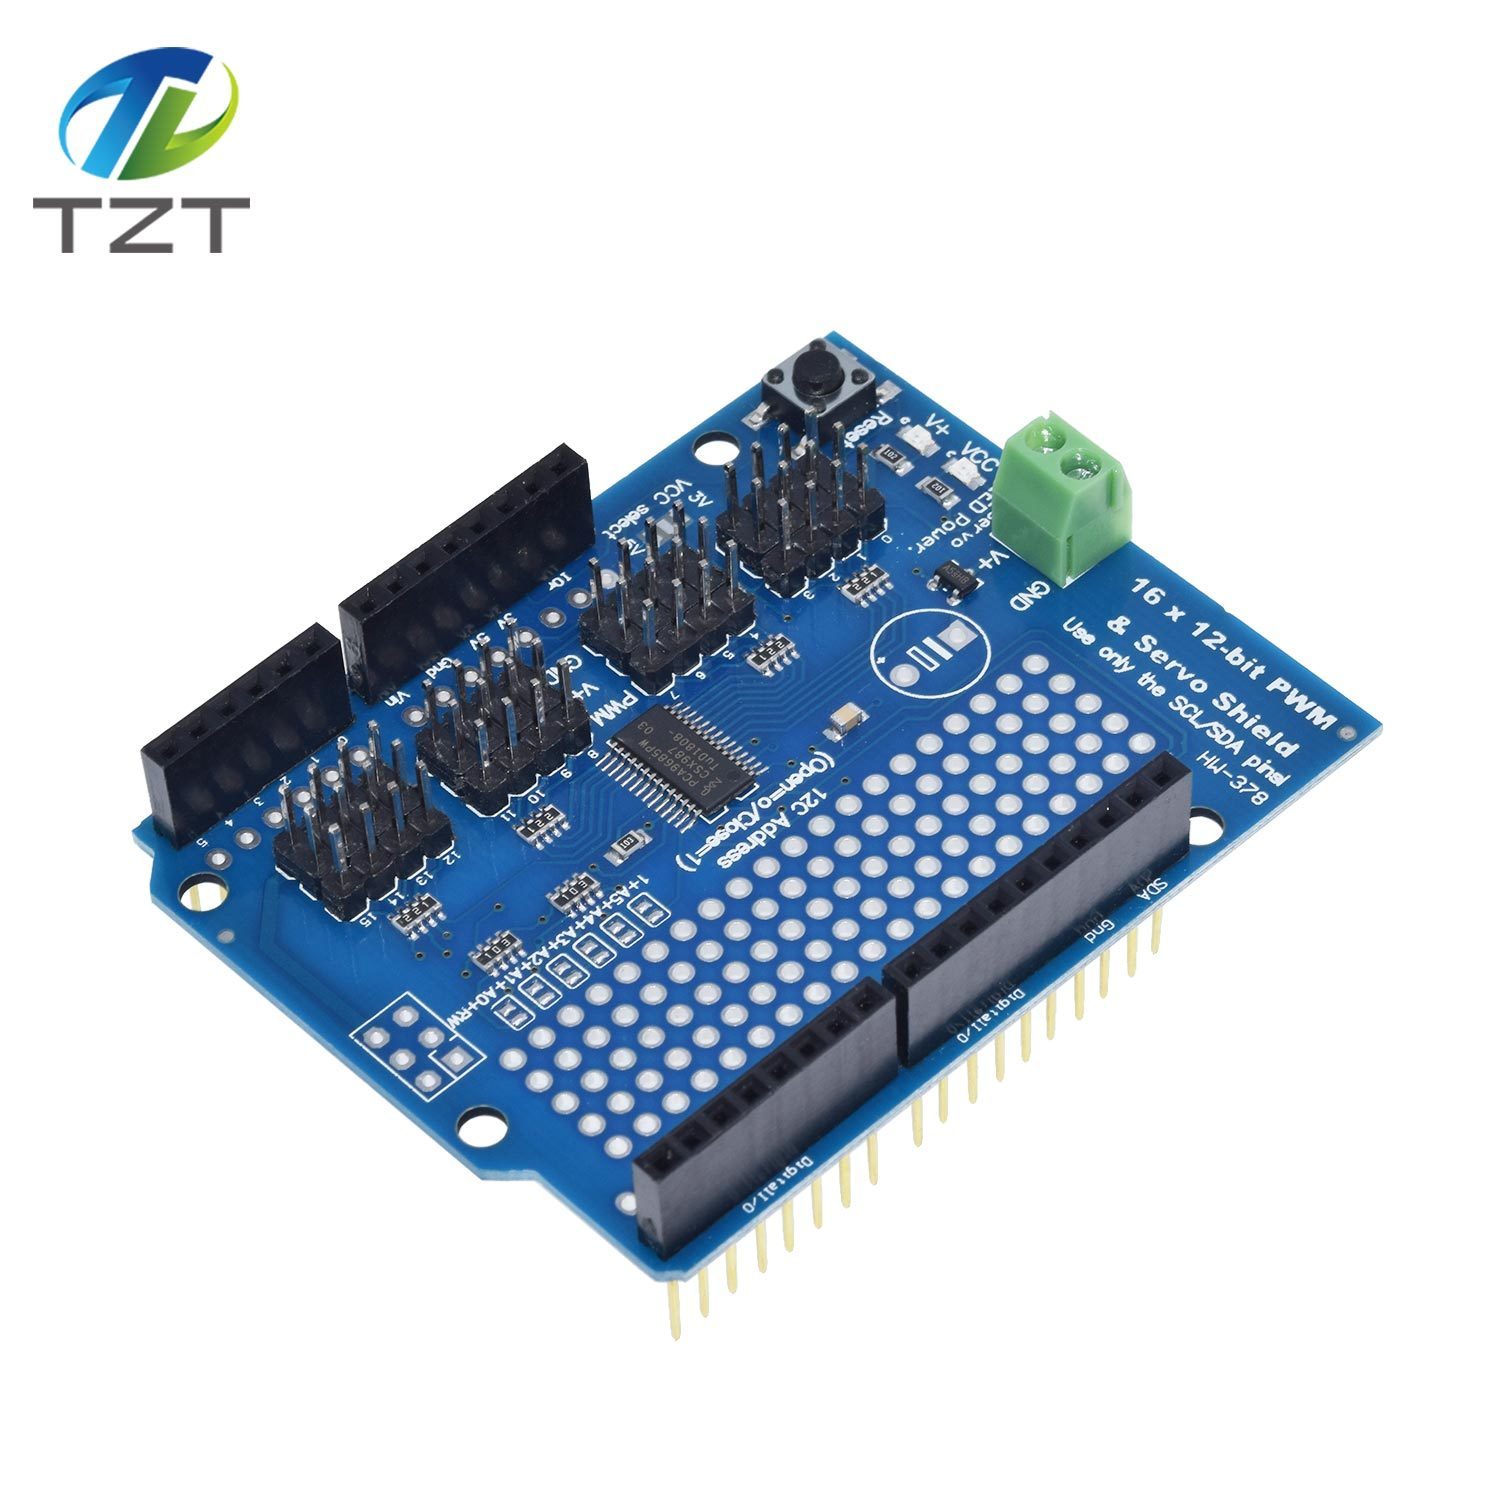 TZT  Motor/Stepper/Servo/Robot Shield for Arduino I2C v2 Kit w/ PWM Driver TOP